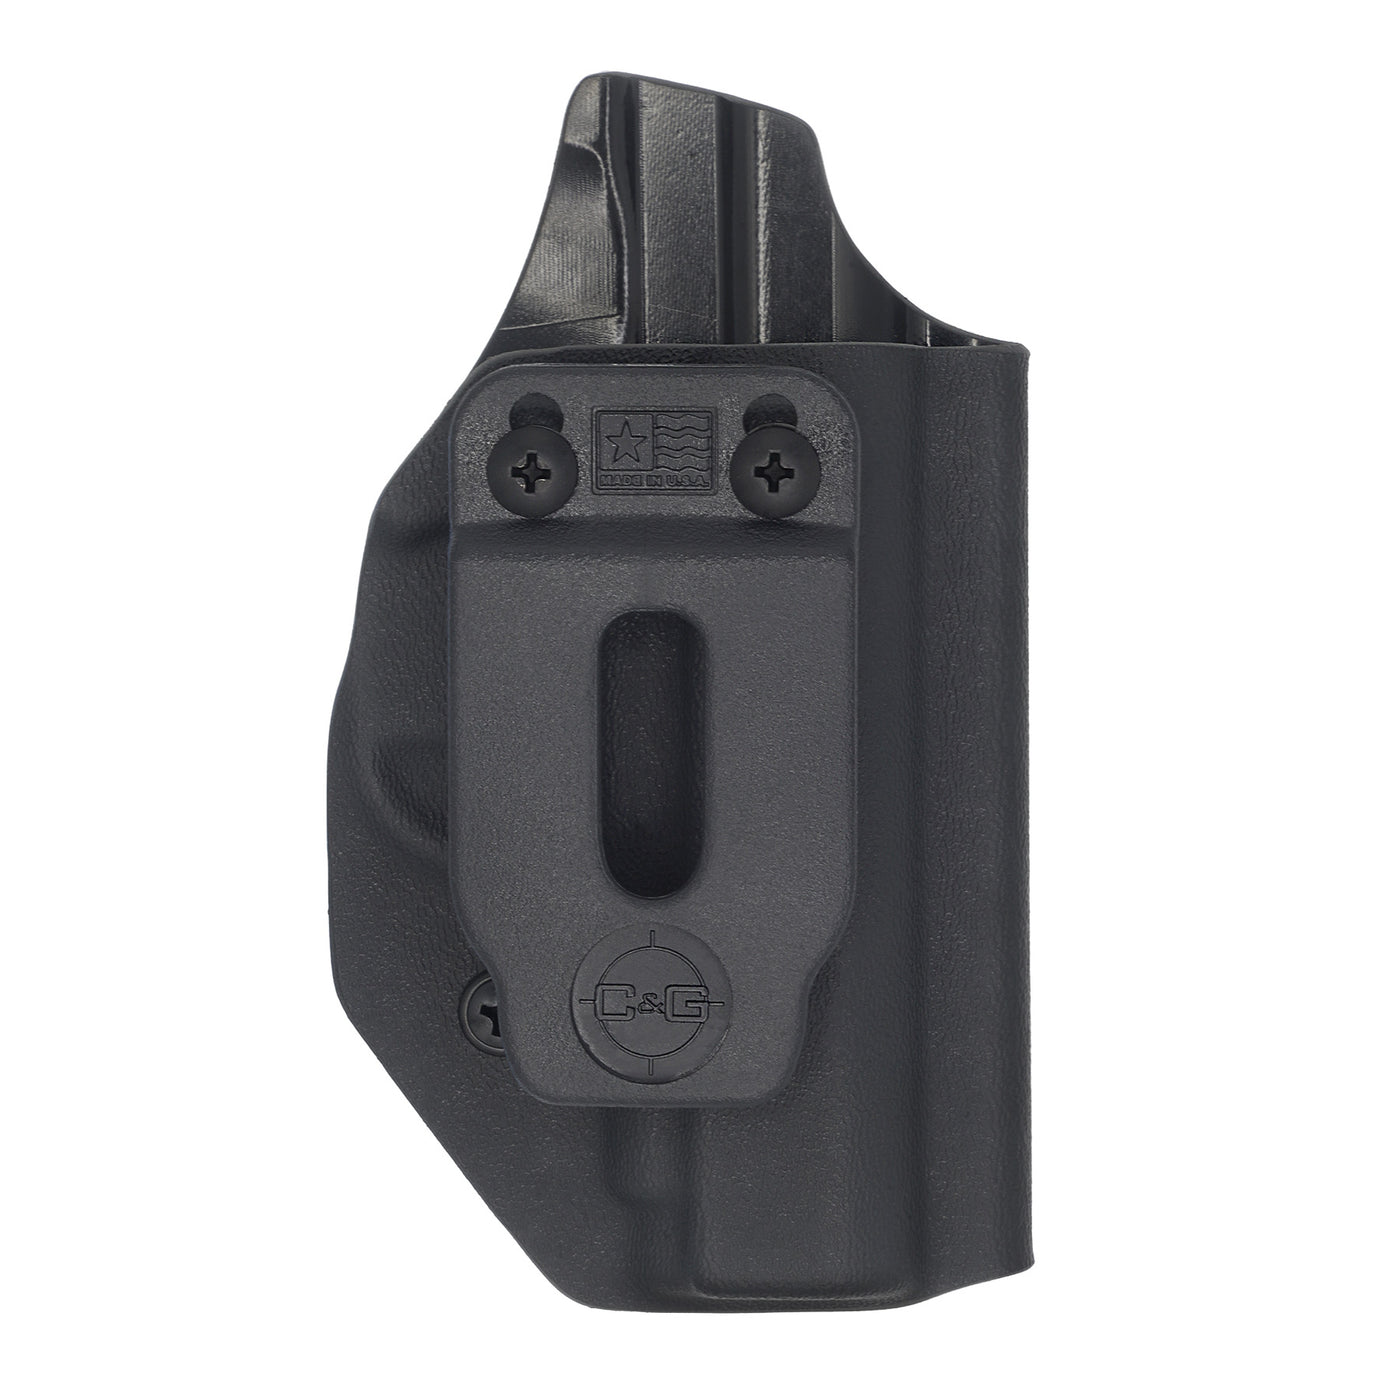 C&G Holsters Covert IWB inside the waistband Kydex holster for Kimber Micro 9